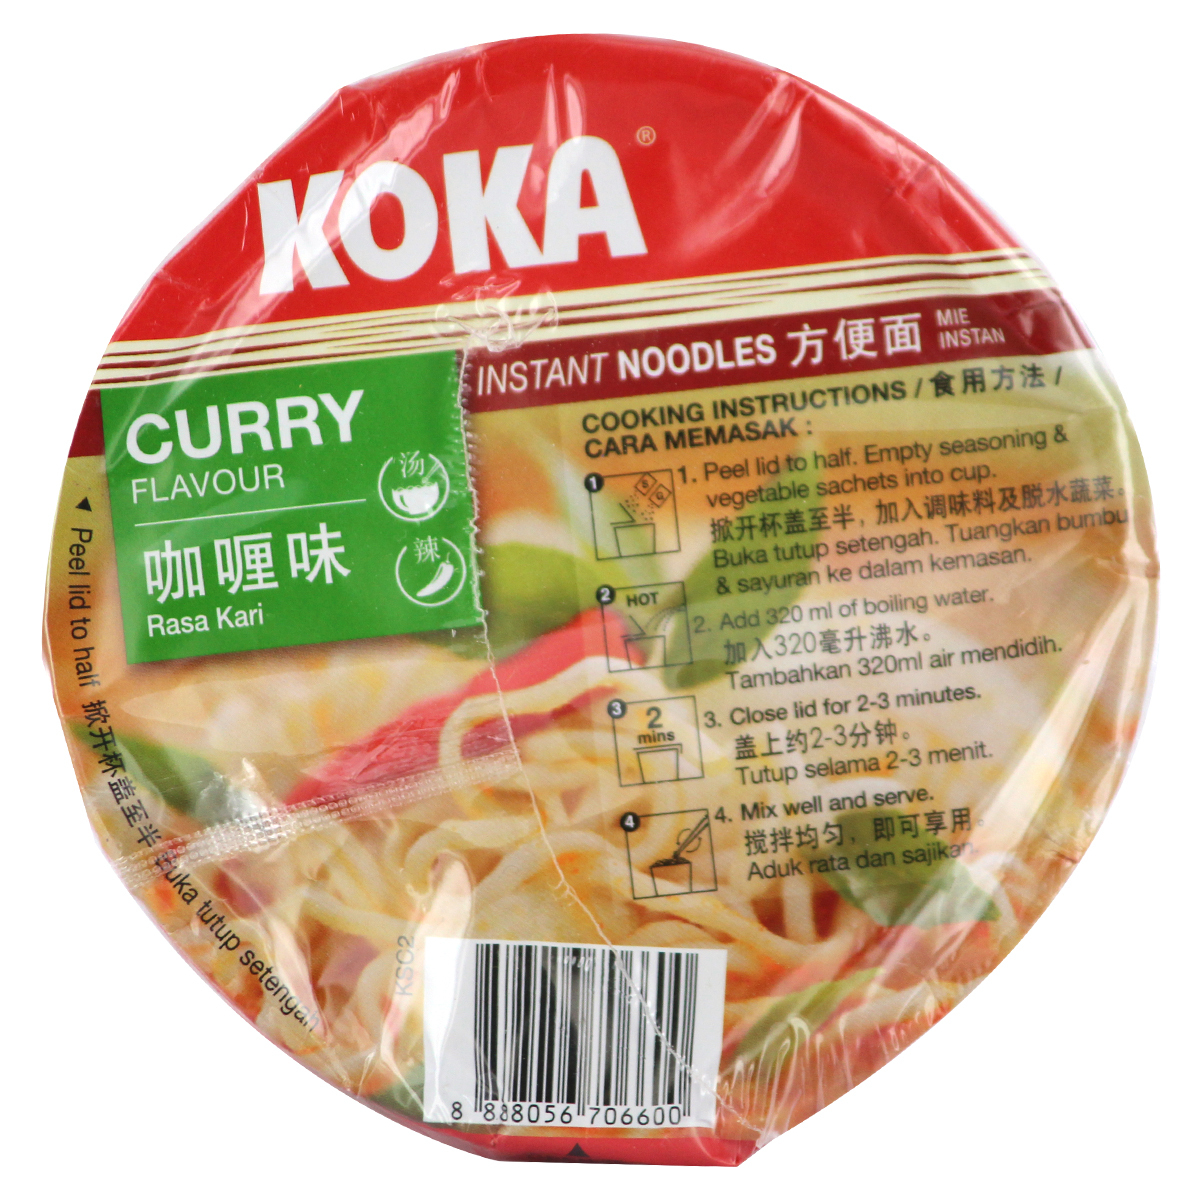 Koka Noodles Curry Flavour Cup 70gm